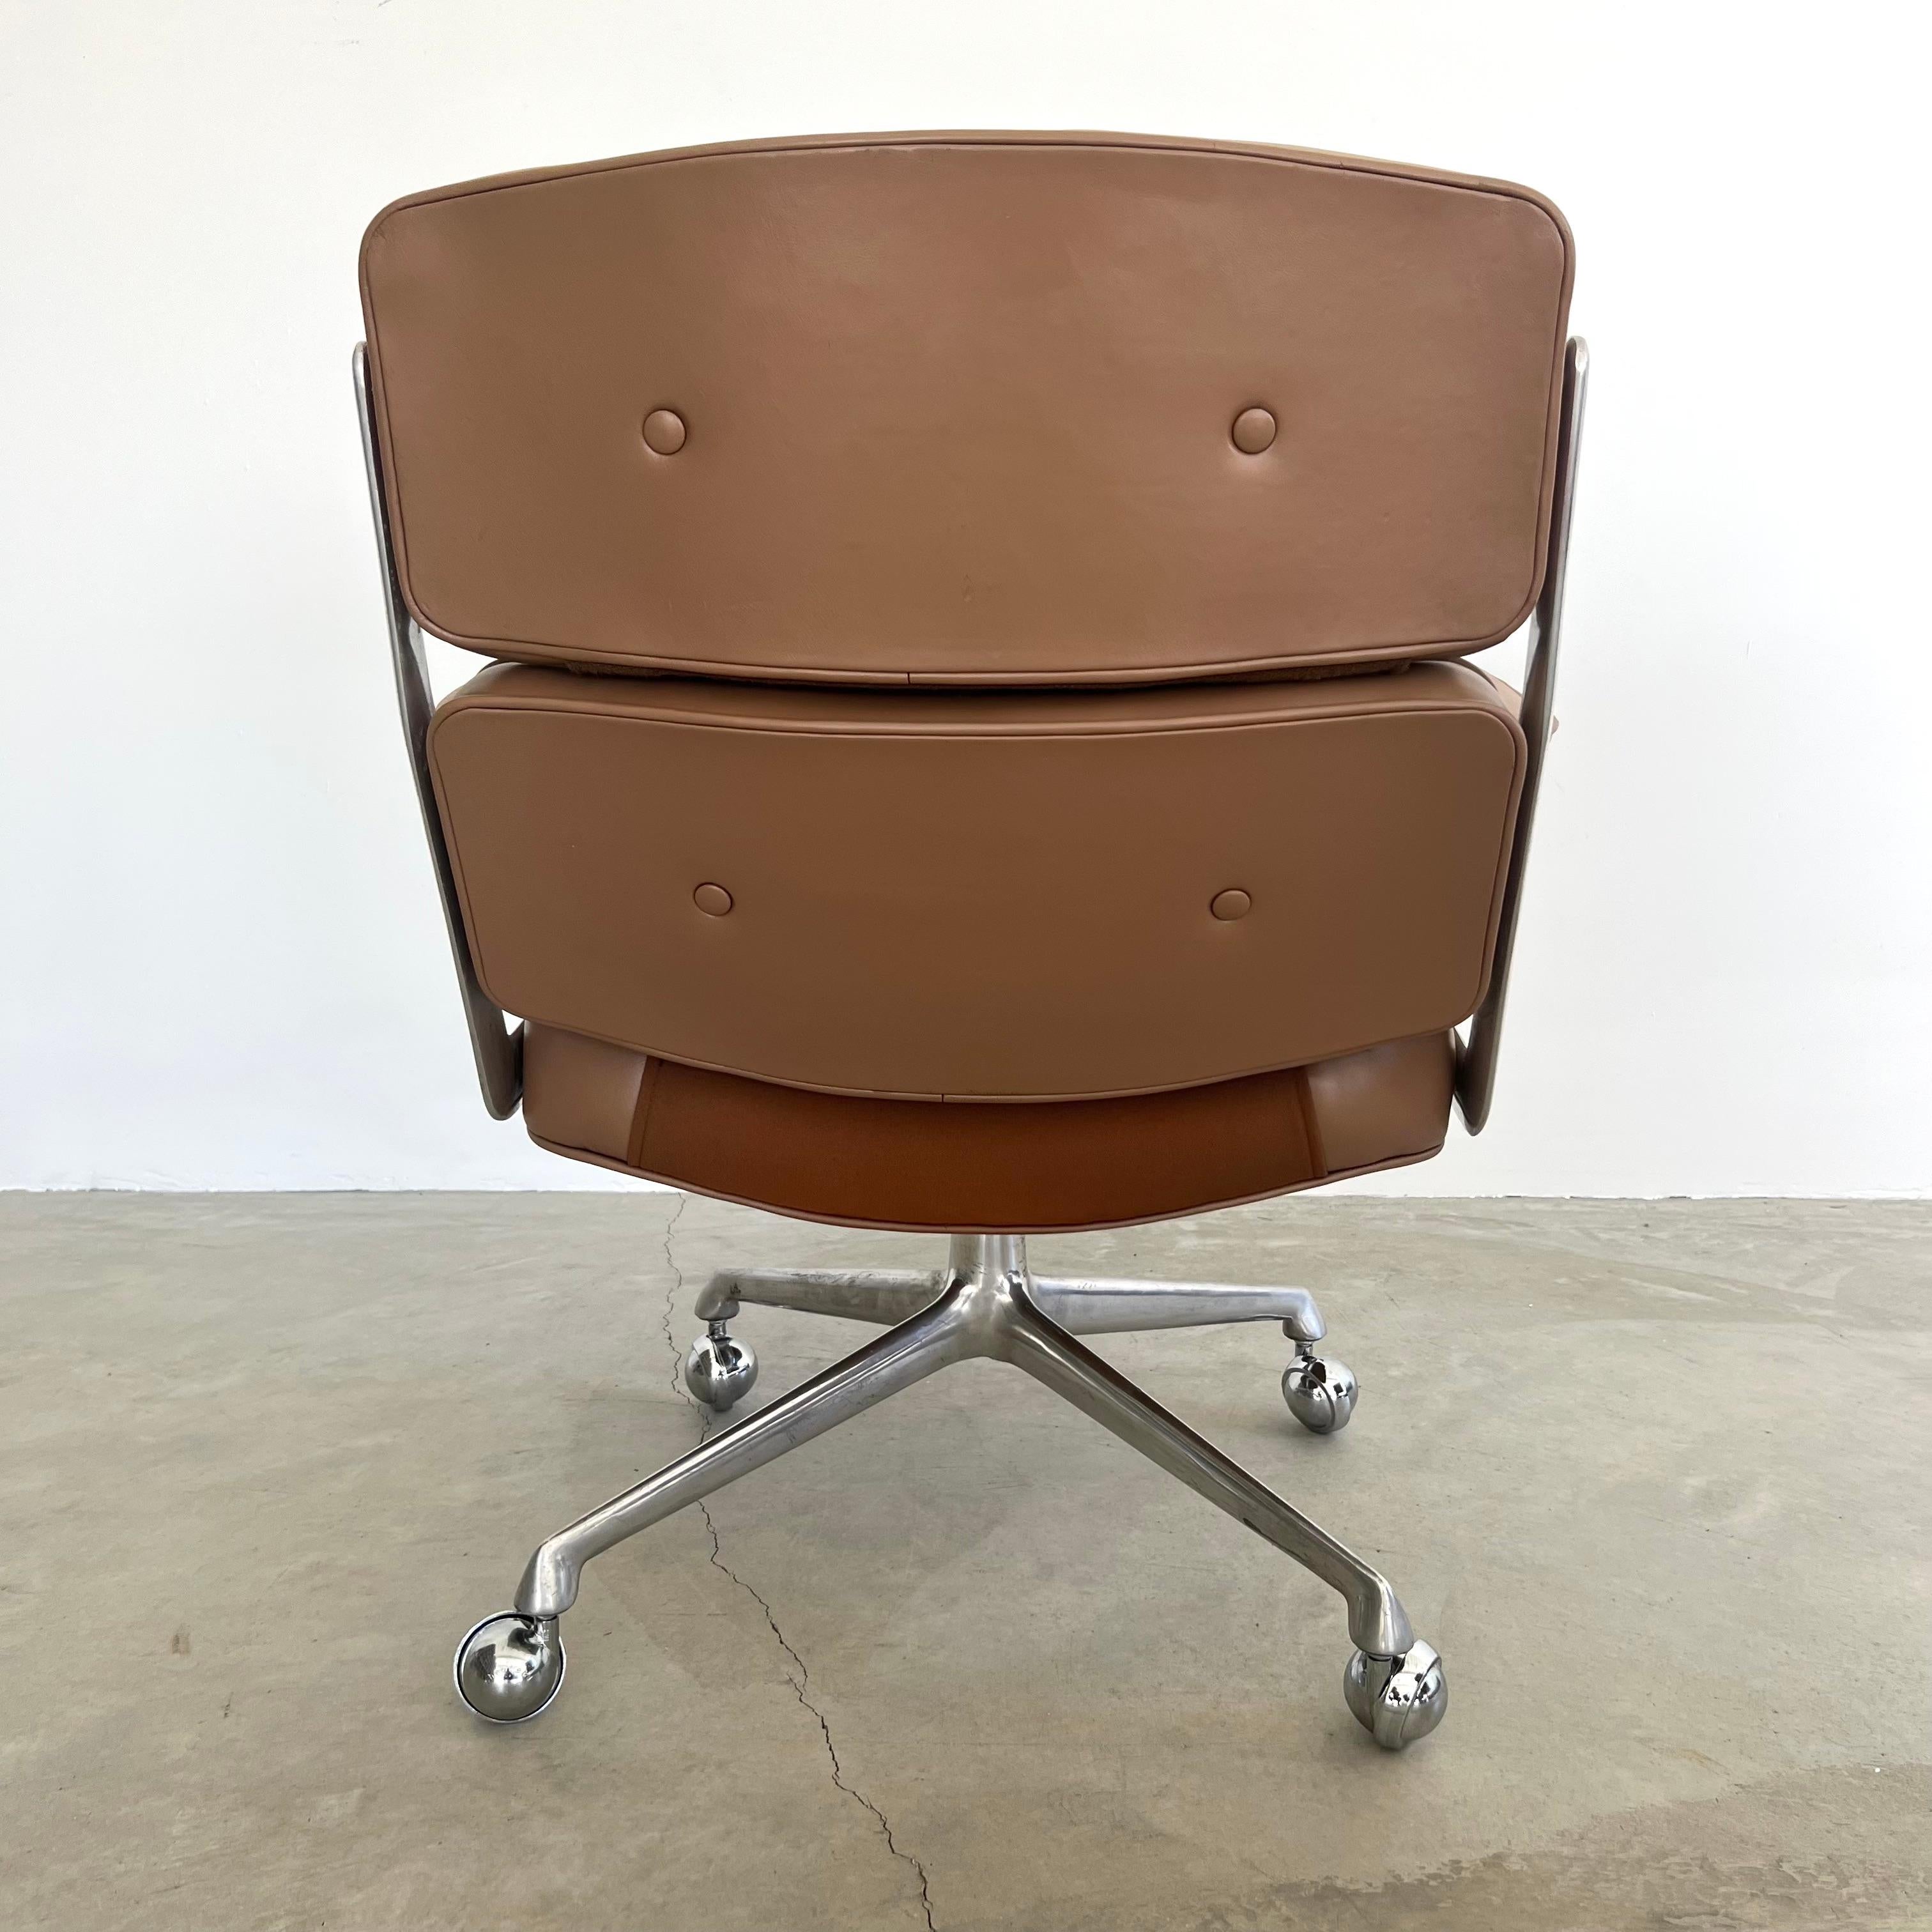 Eames Time Life Chair aus braunem Leder für Herman Miller, 1980er Jahre, USA (Ende des 20. Jahrhunderts) im Angebot